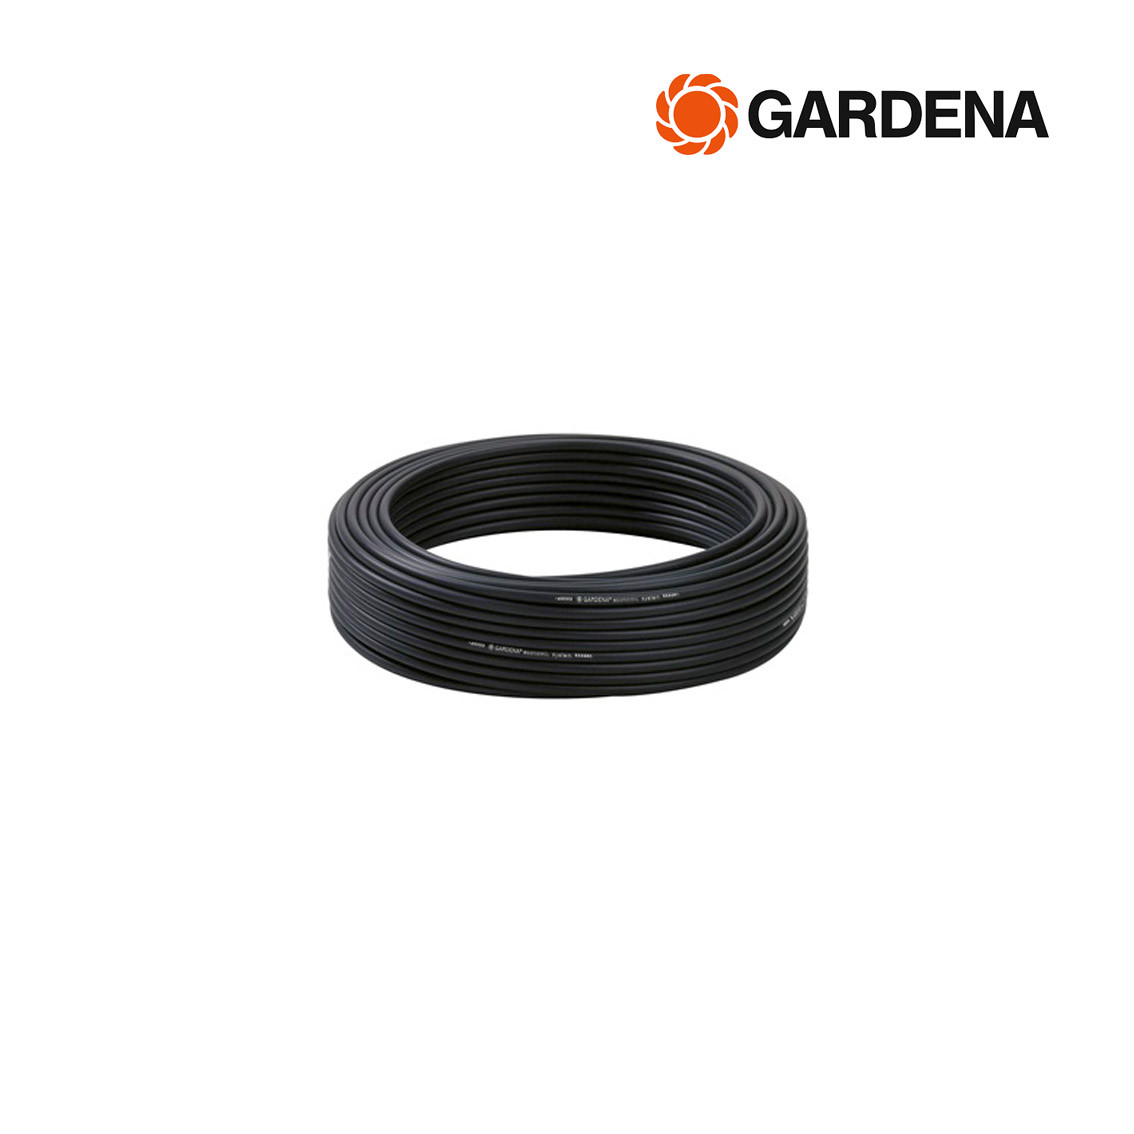 GARDENA Gardena Tuyau de Distribution 1350-20 Tubes 15m 4,6mm pour Pression 